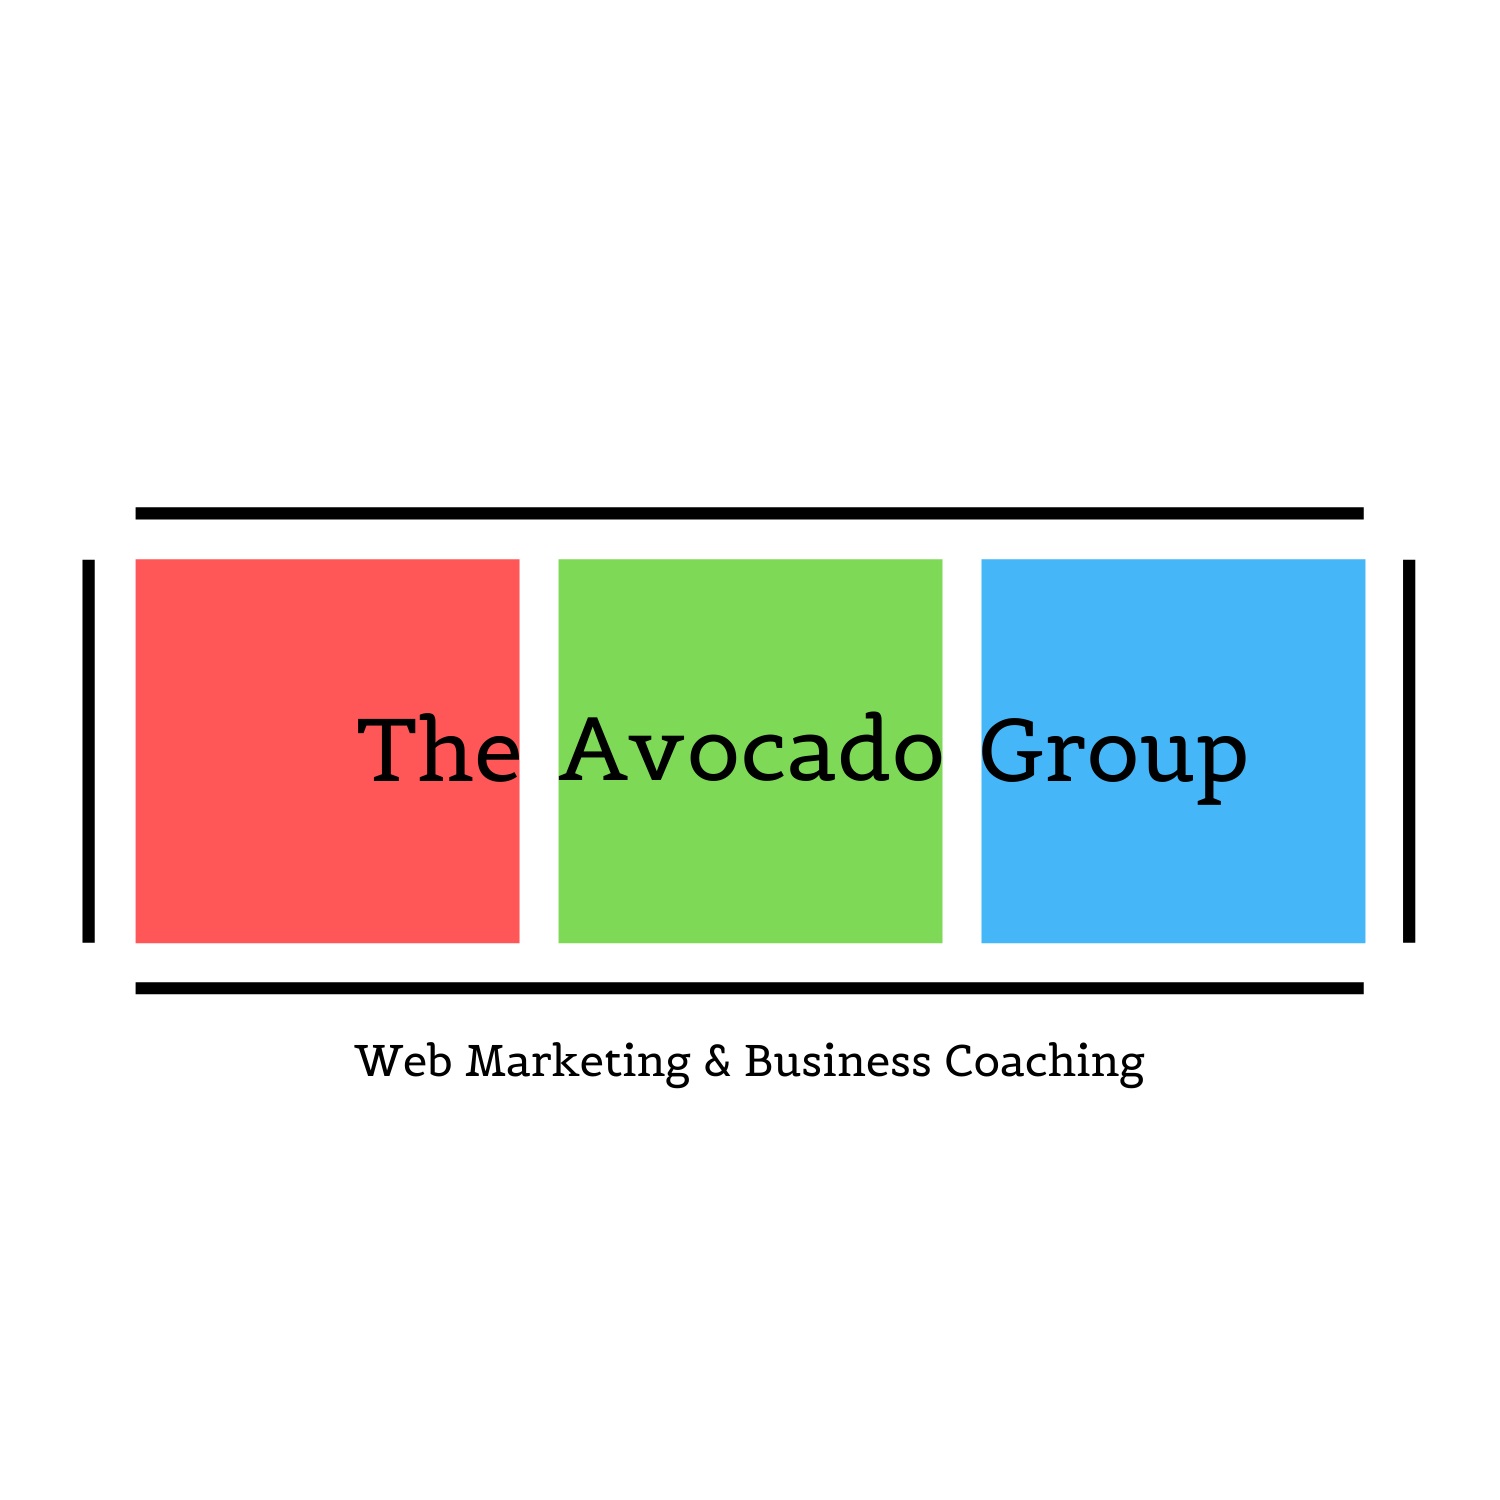 The Avocado Group